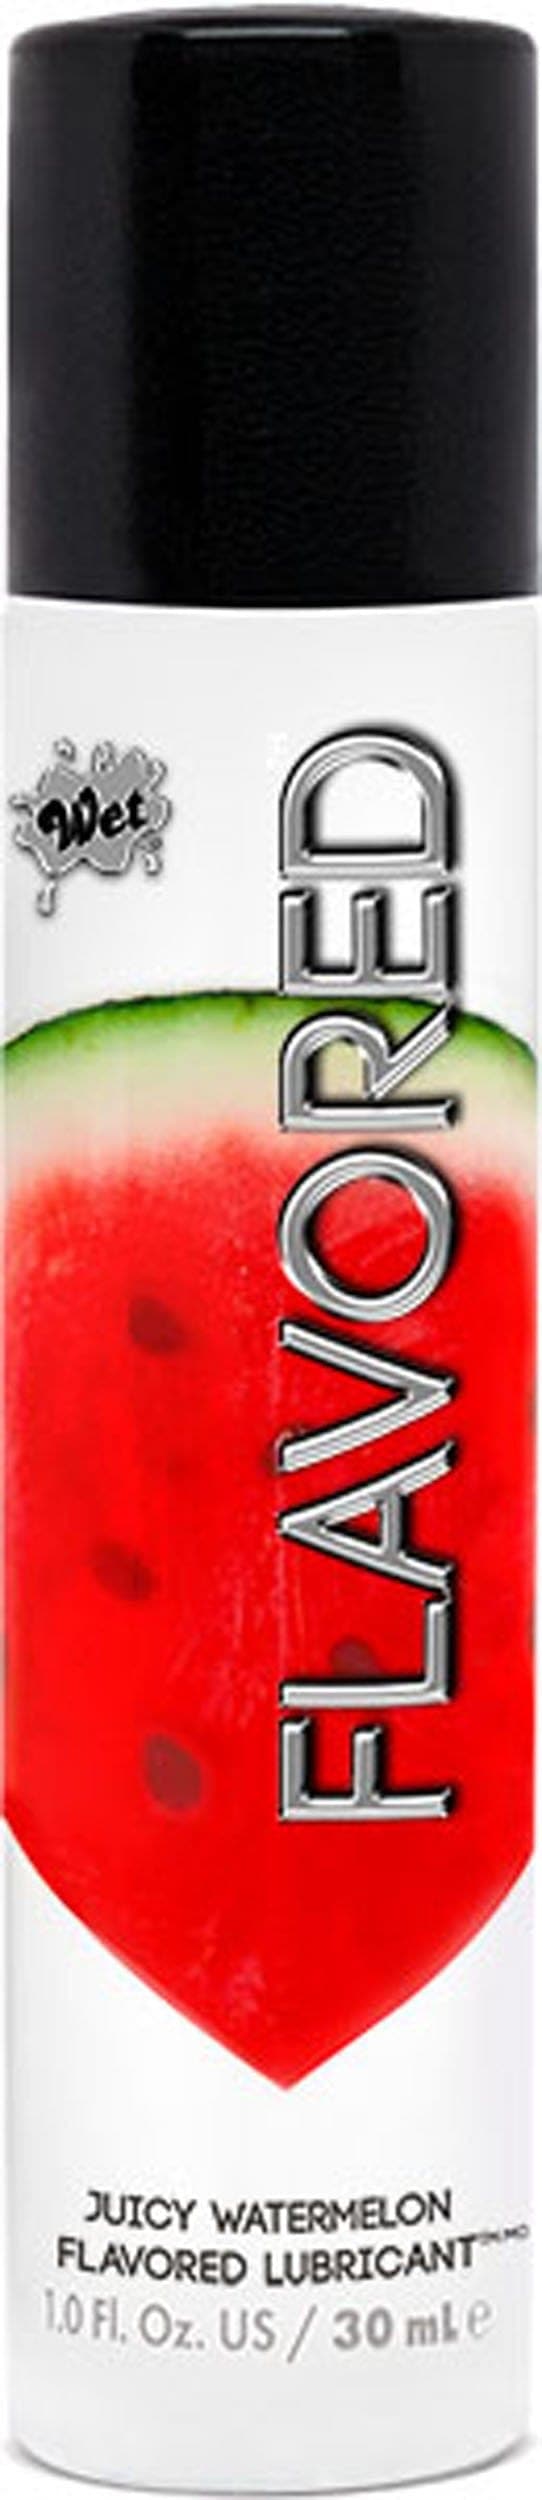 wet flavored juicy watermelon 1 fl oz